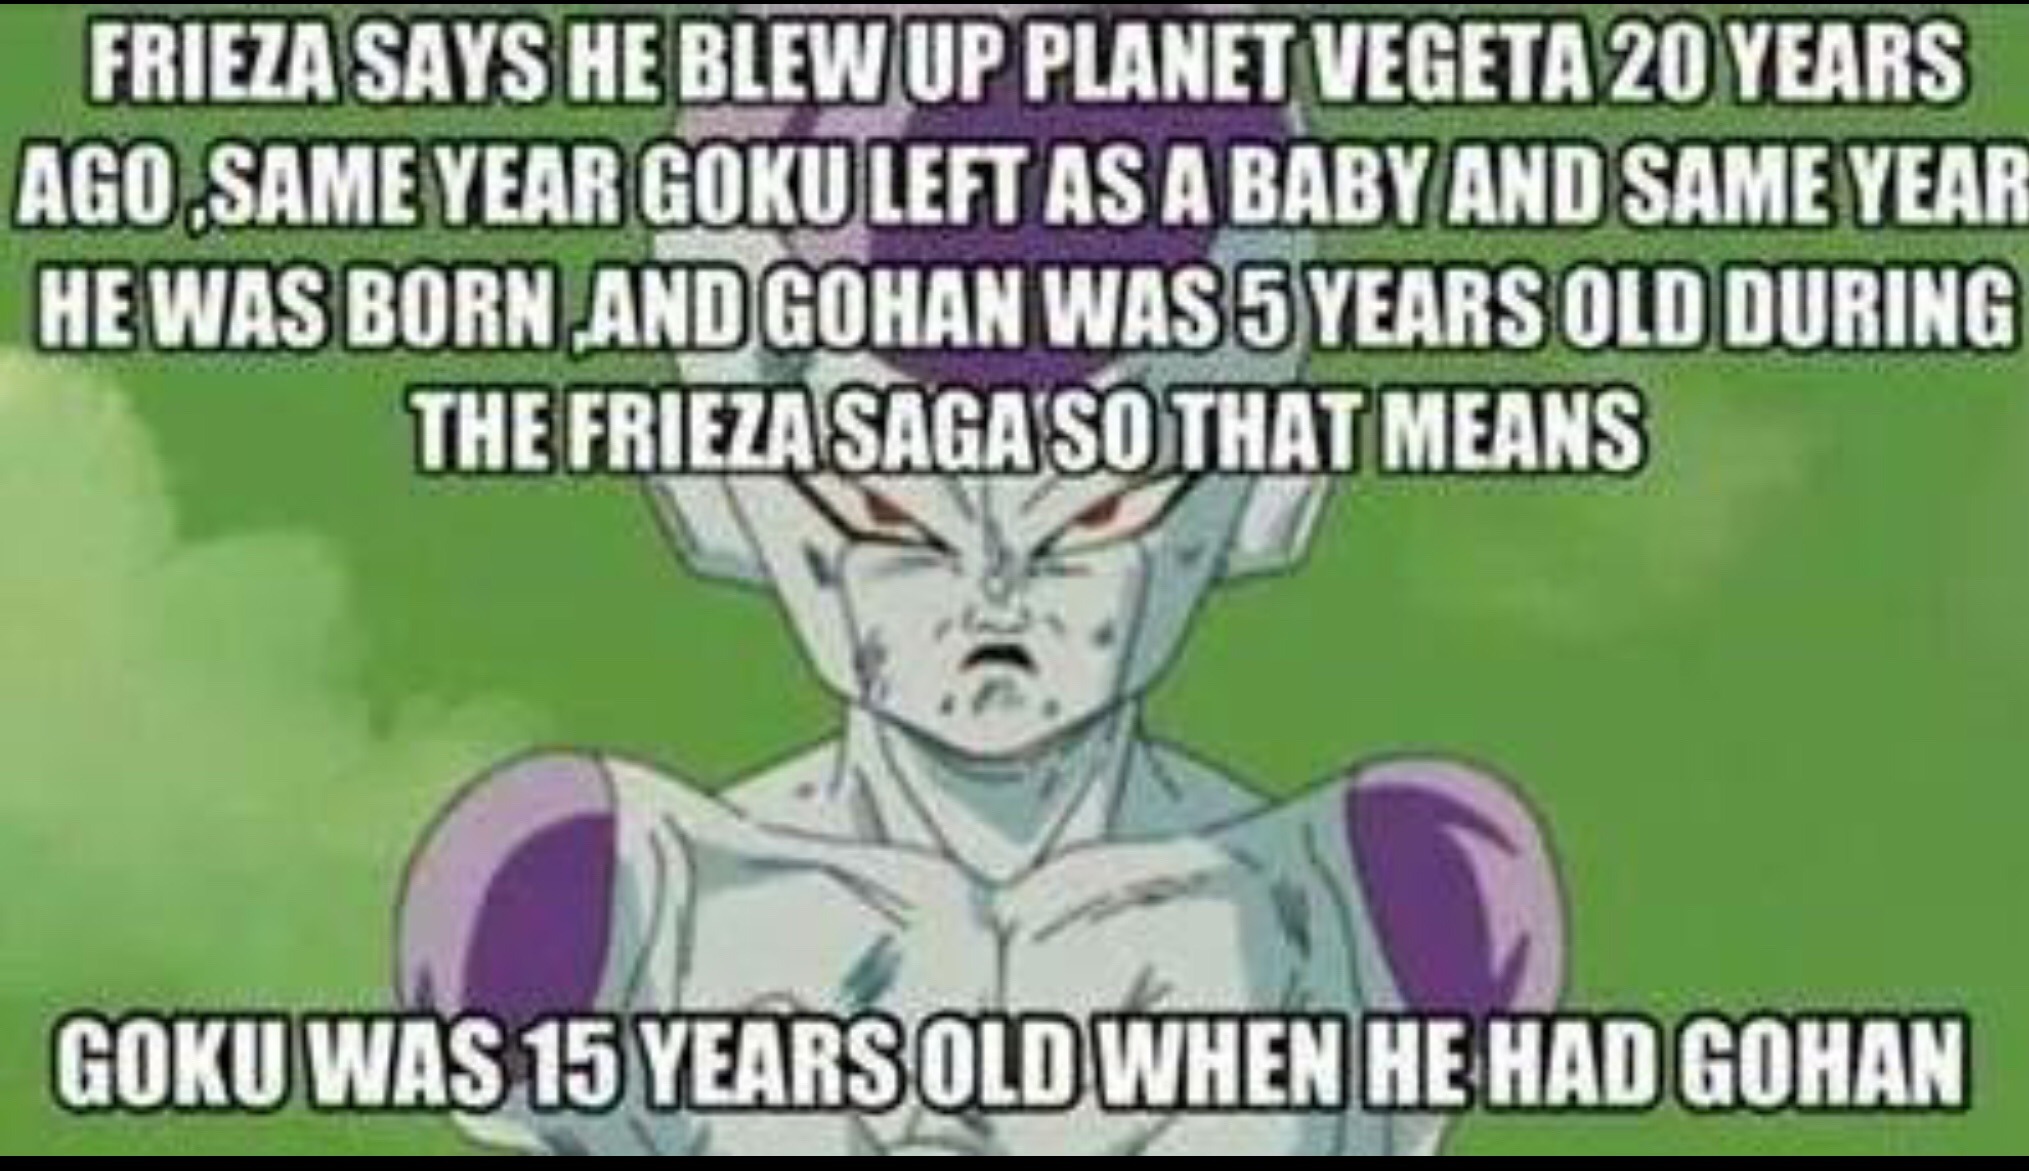 So Goku was underaged for sex - meme